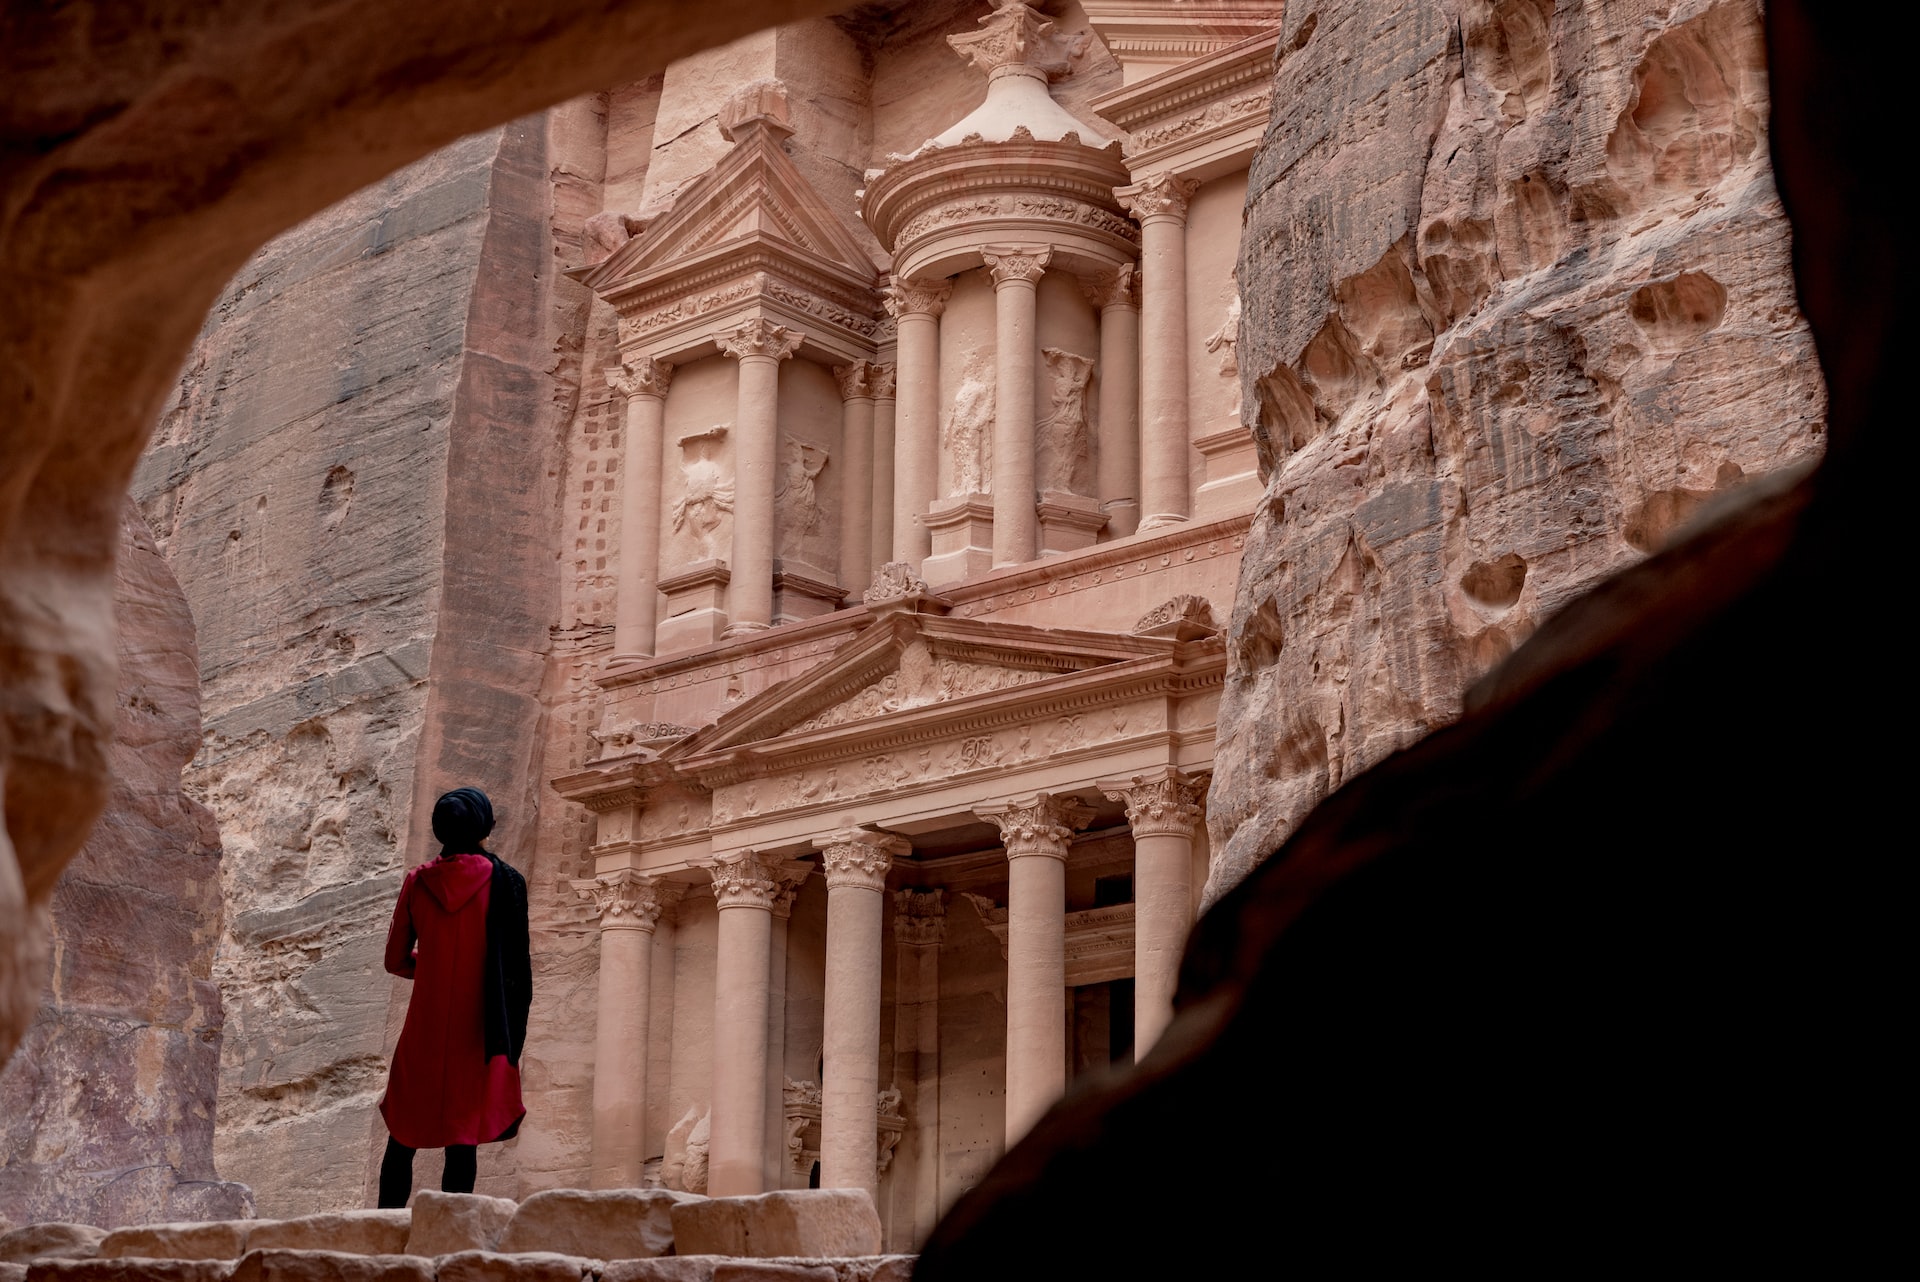 The amazing Petra Treasury